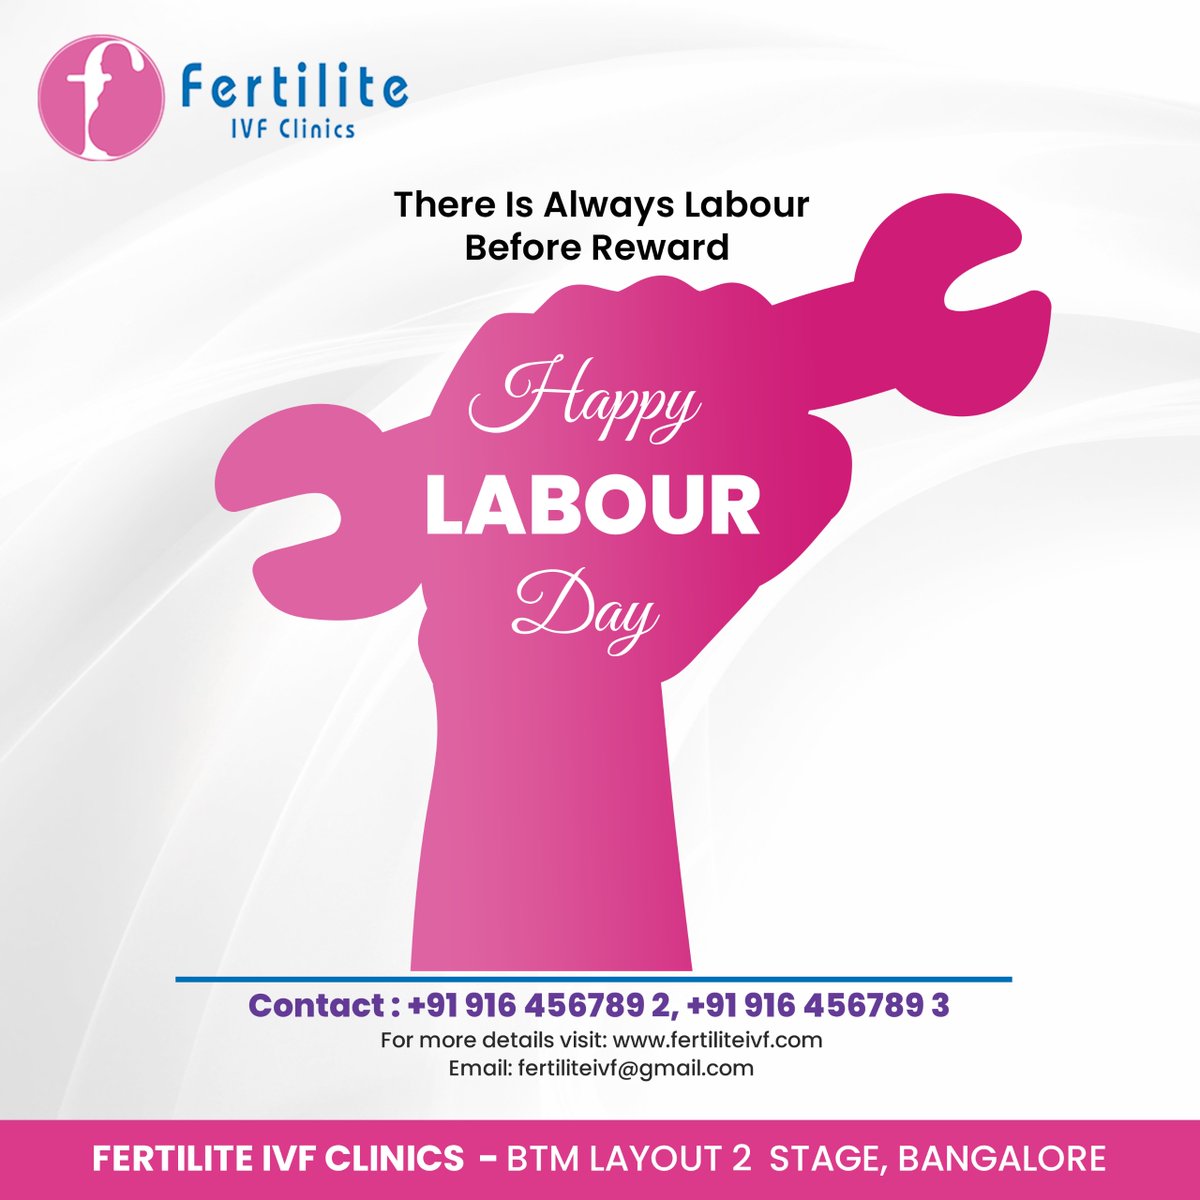 🛠️ **'There Is Always Labour Before Reward'** 🛠️  
Happy LABOUR Day!  

🌐 **For more details visit:** fertiliteivf.com  
📧 **Email:** fertiliteivf@gmail.com  

🏥 **Location:**  
FERTILITE IVF CLINICS  
BTM Layout 2 Stage, Bangalore  

#LabourDay #FertilityClinic